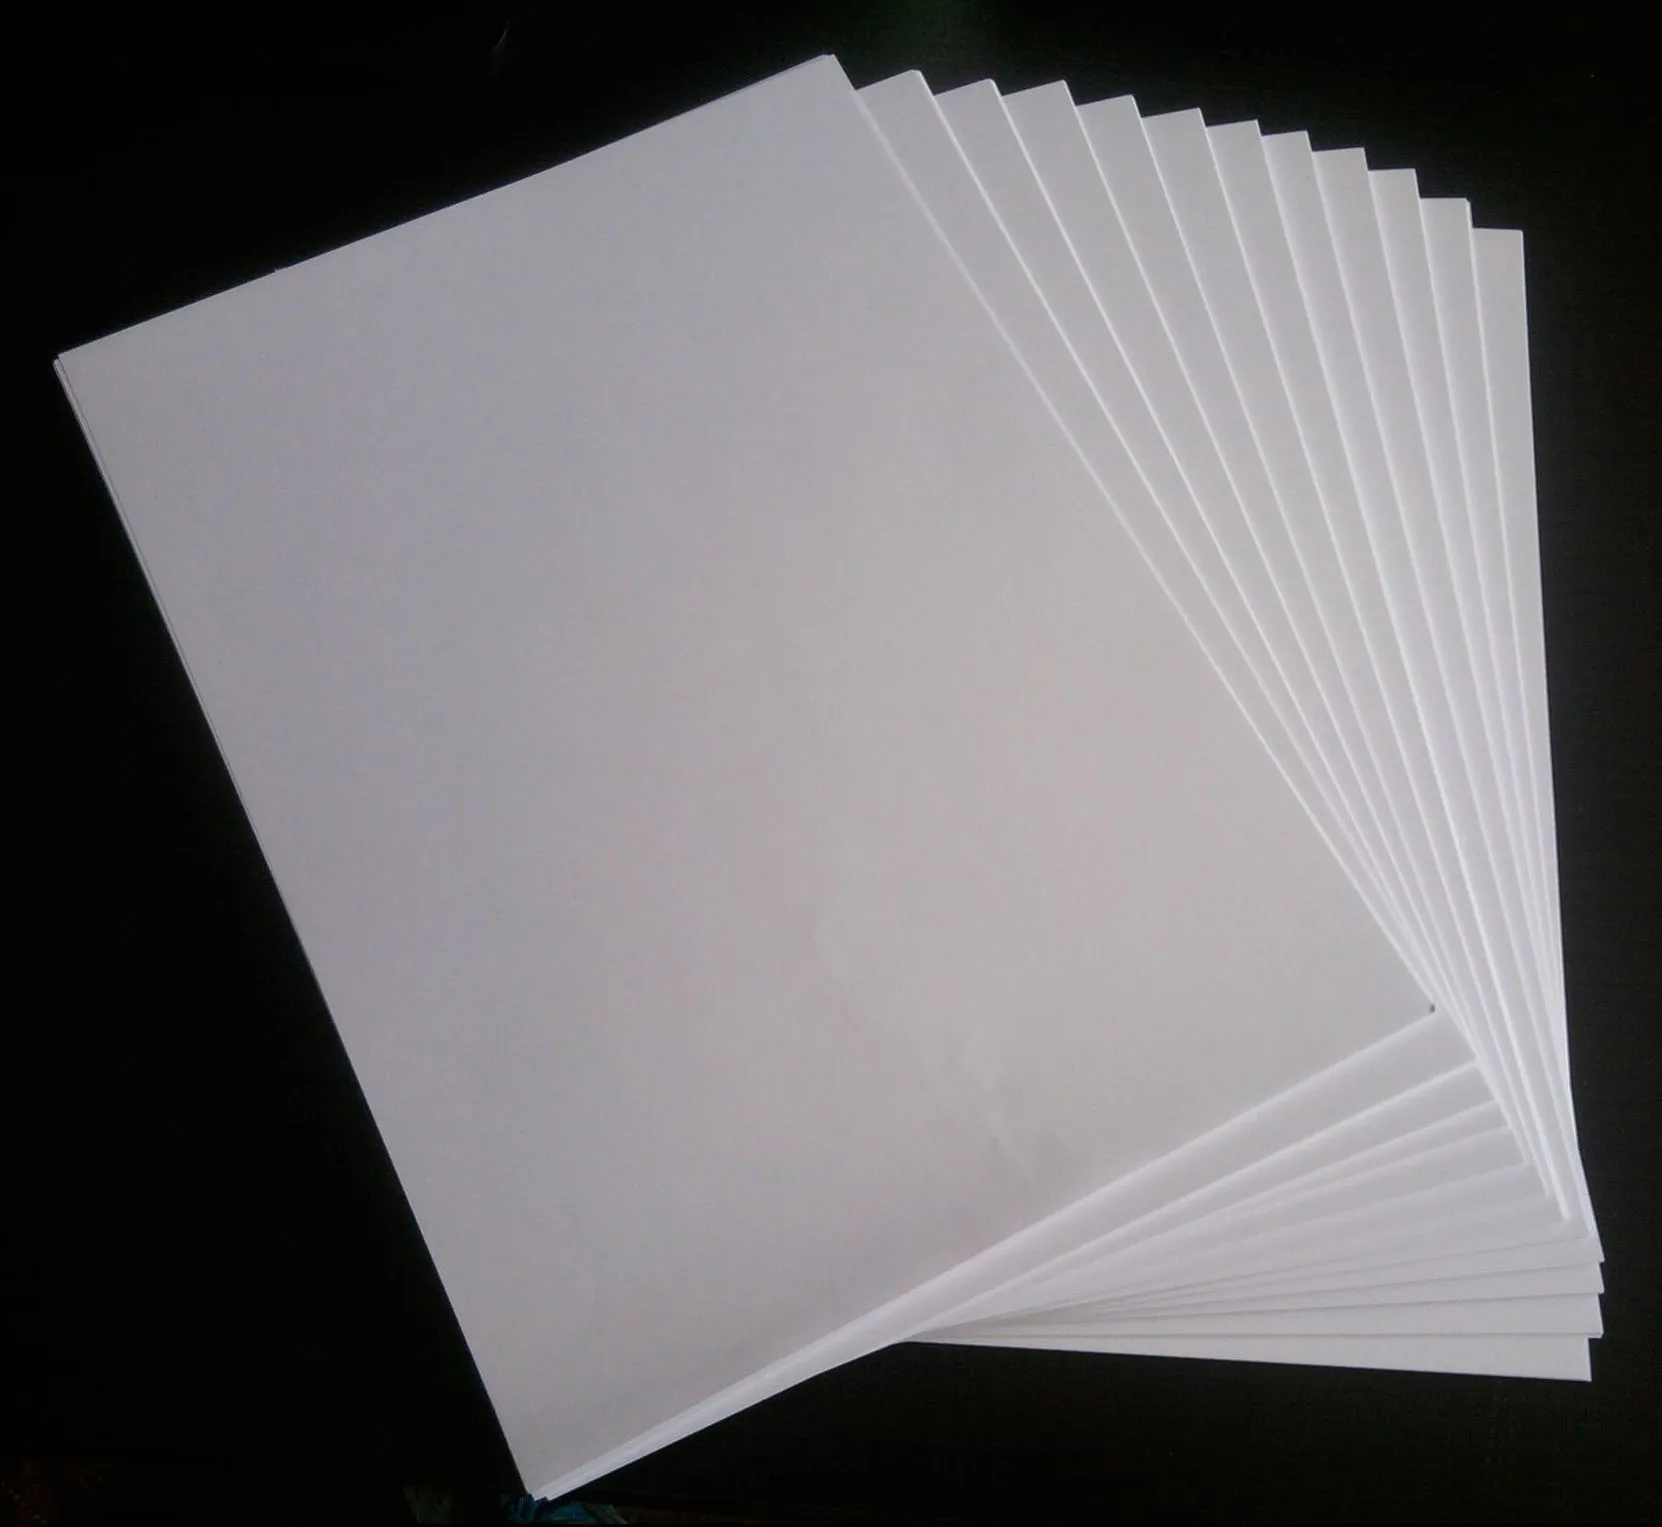 photo printing paper